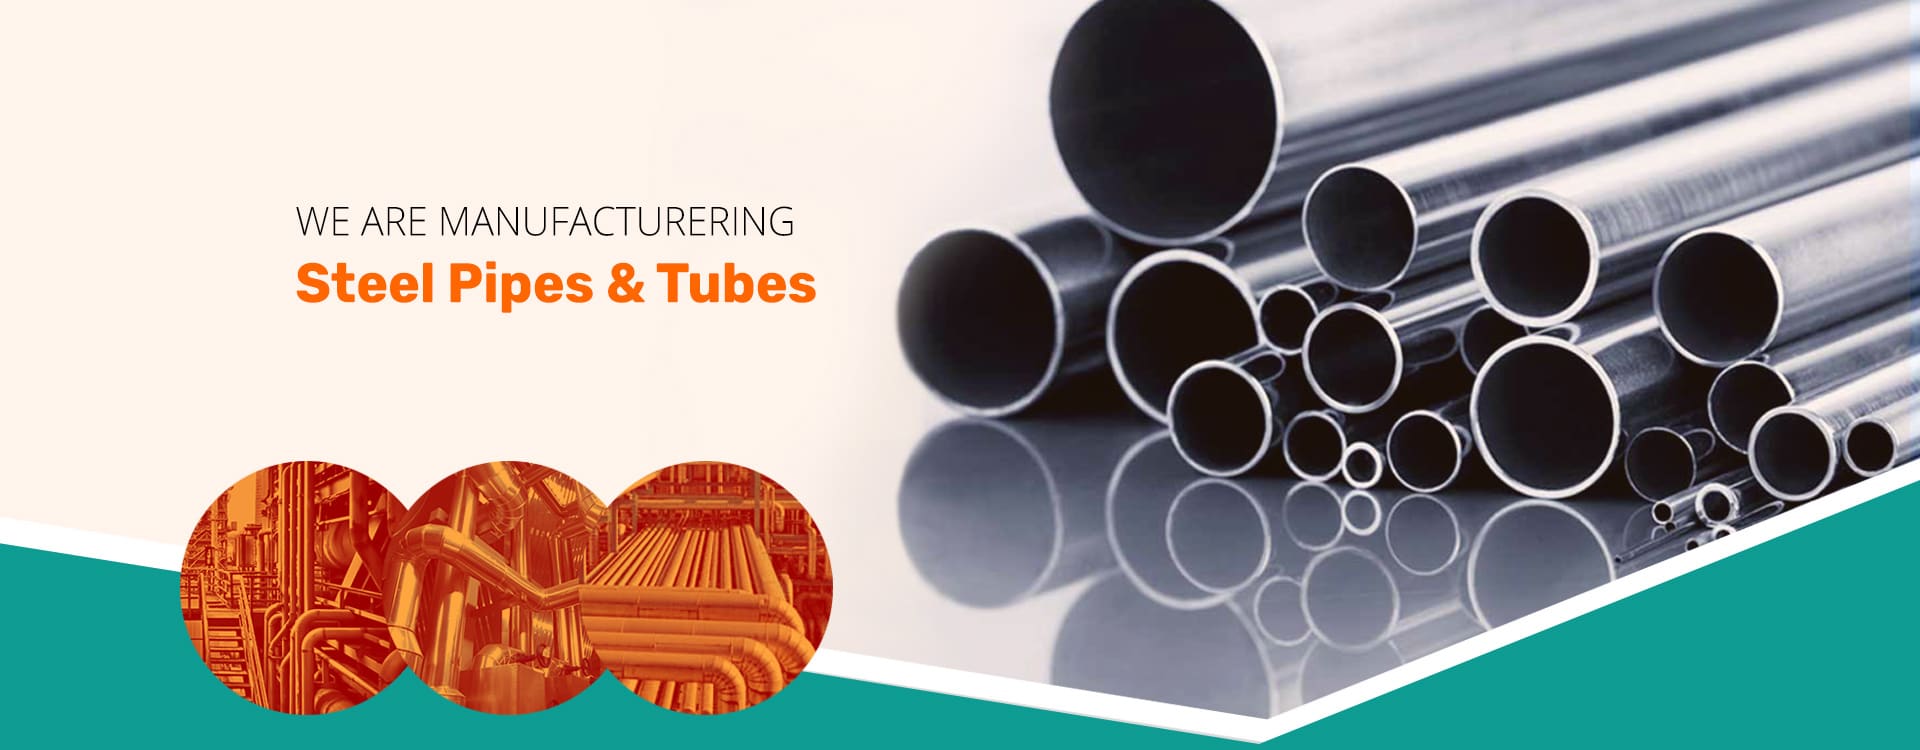 We are Manufacturer of Steel Pipes & Tubes in Ahmedabad, Rajkot, Gandhinagar, Mansa, Vadodara, Bopal, Nadiad